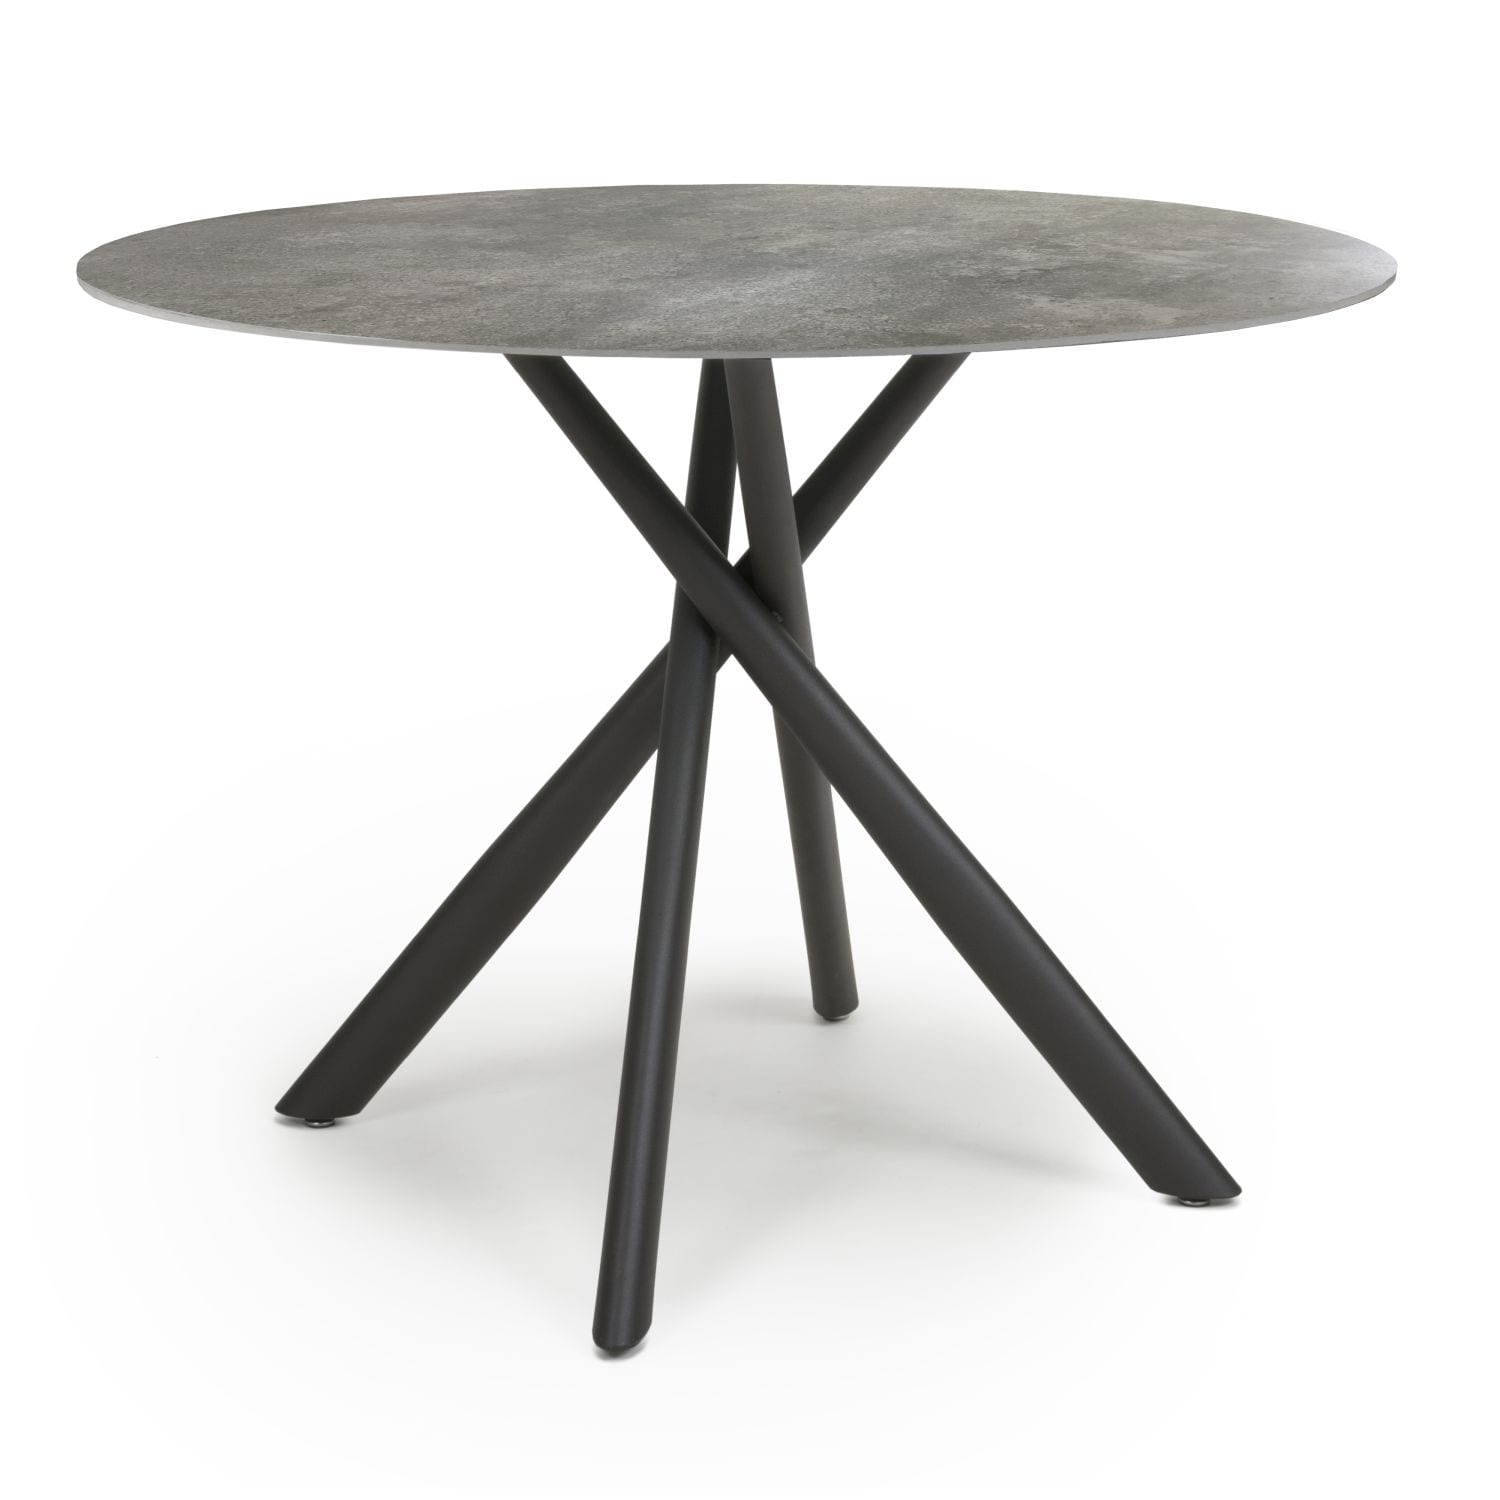 Tanavast Grey Round Table